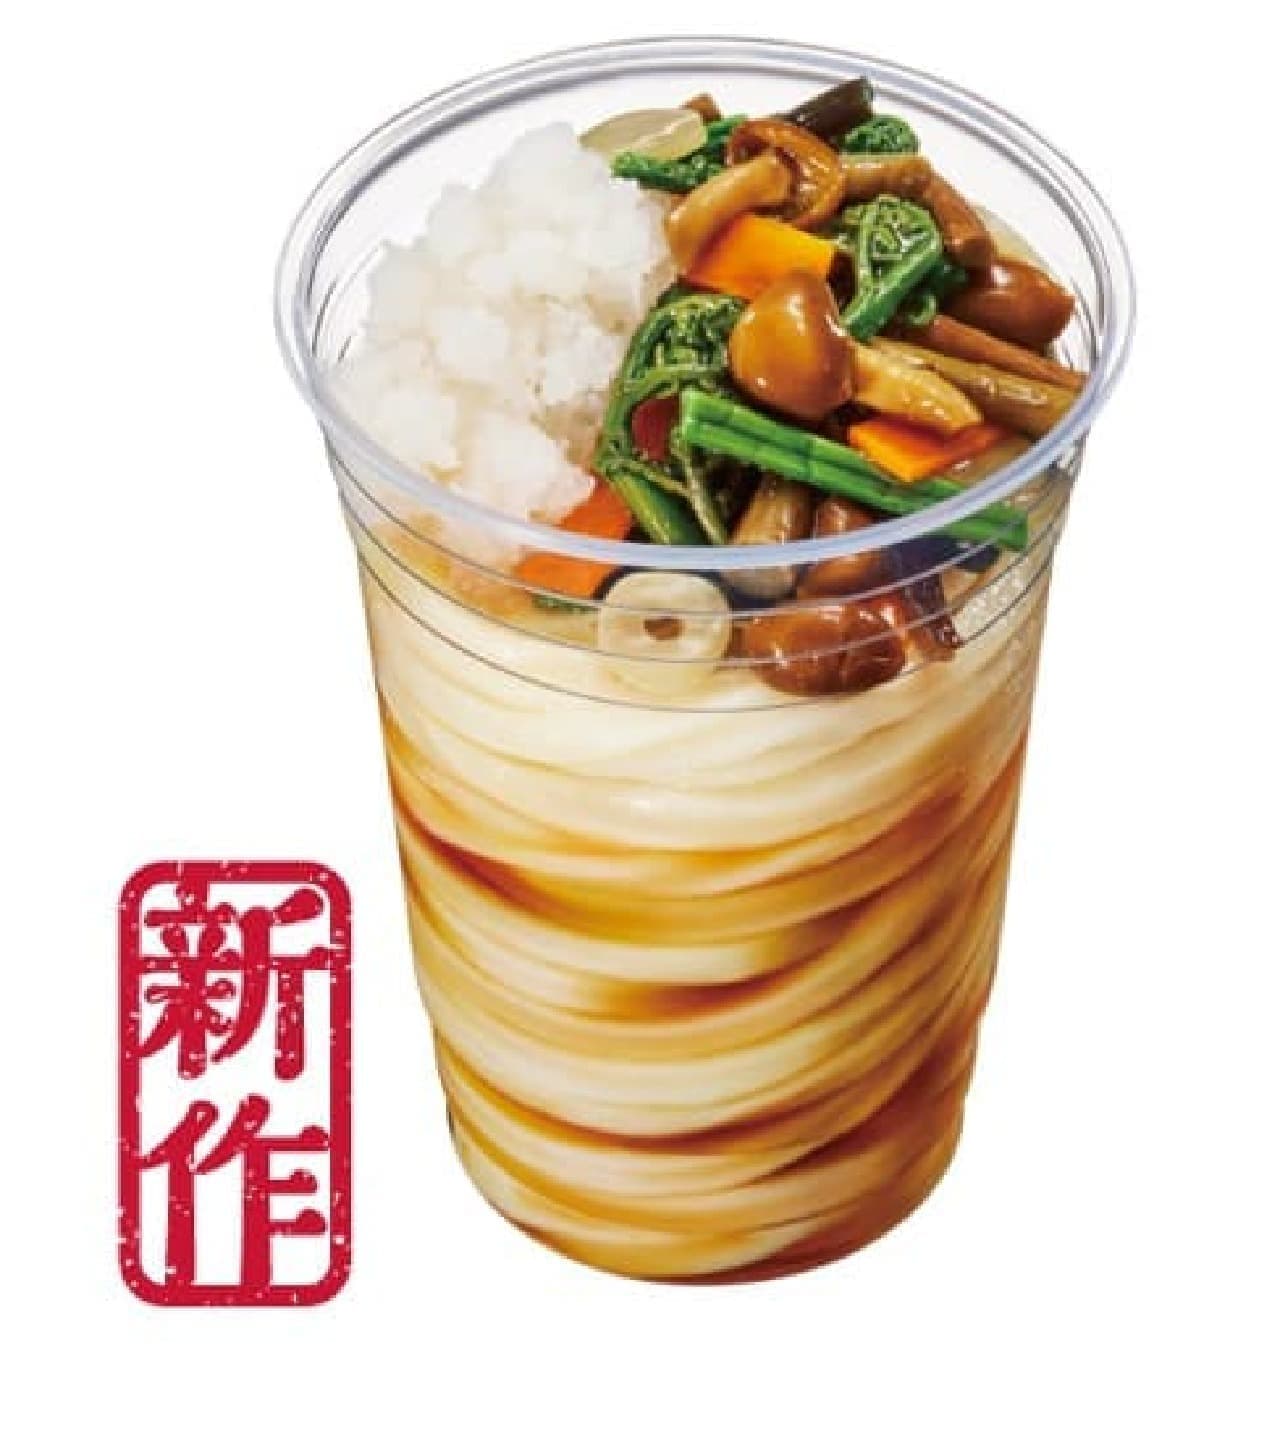 Udon noodles with grated sansai (edible wild vegetables), 450 yen